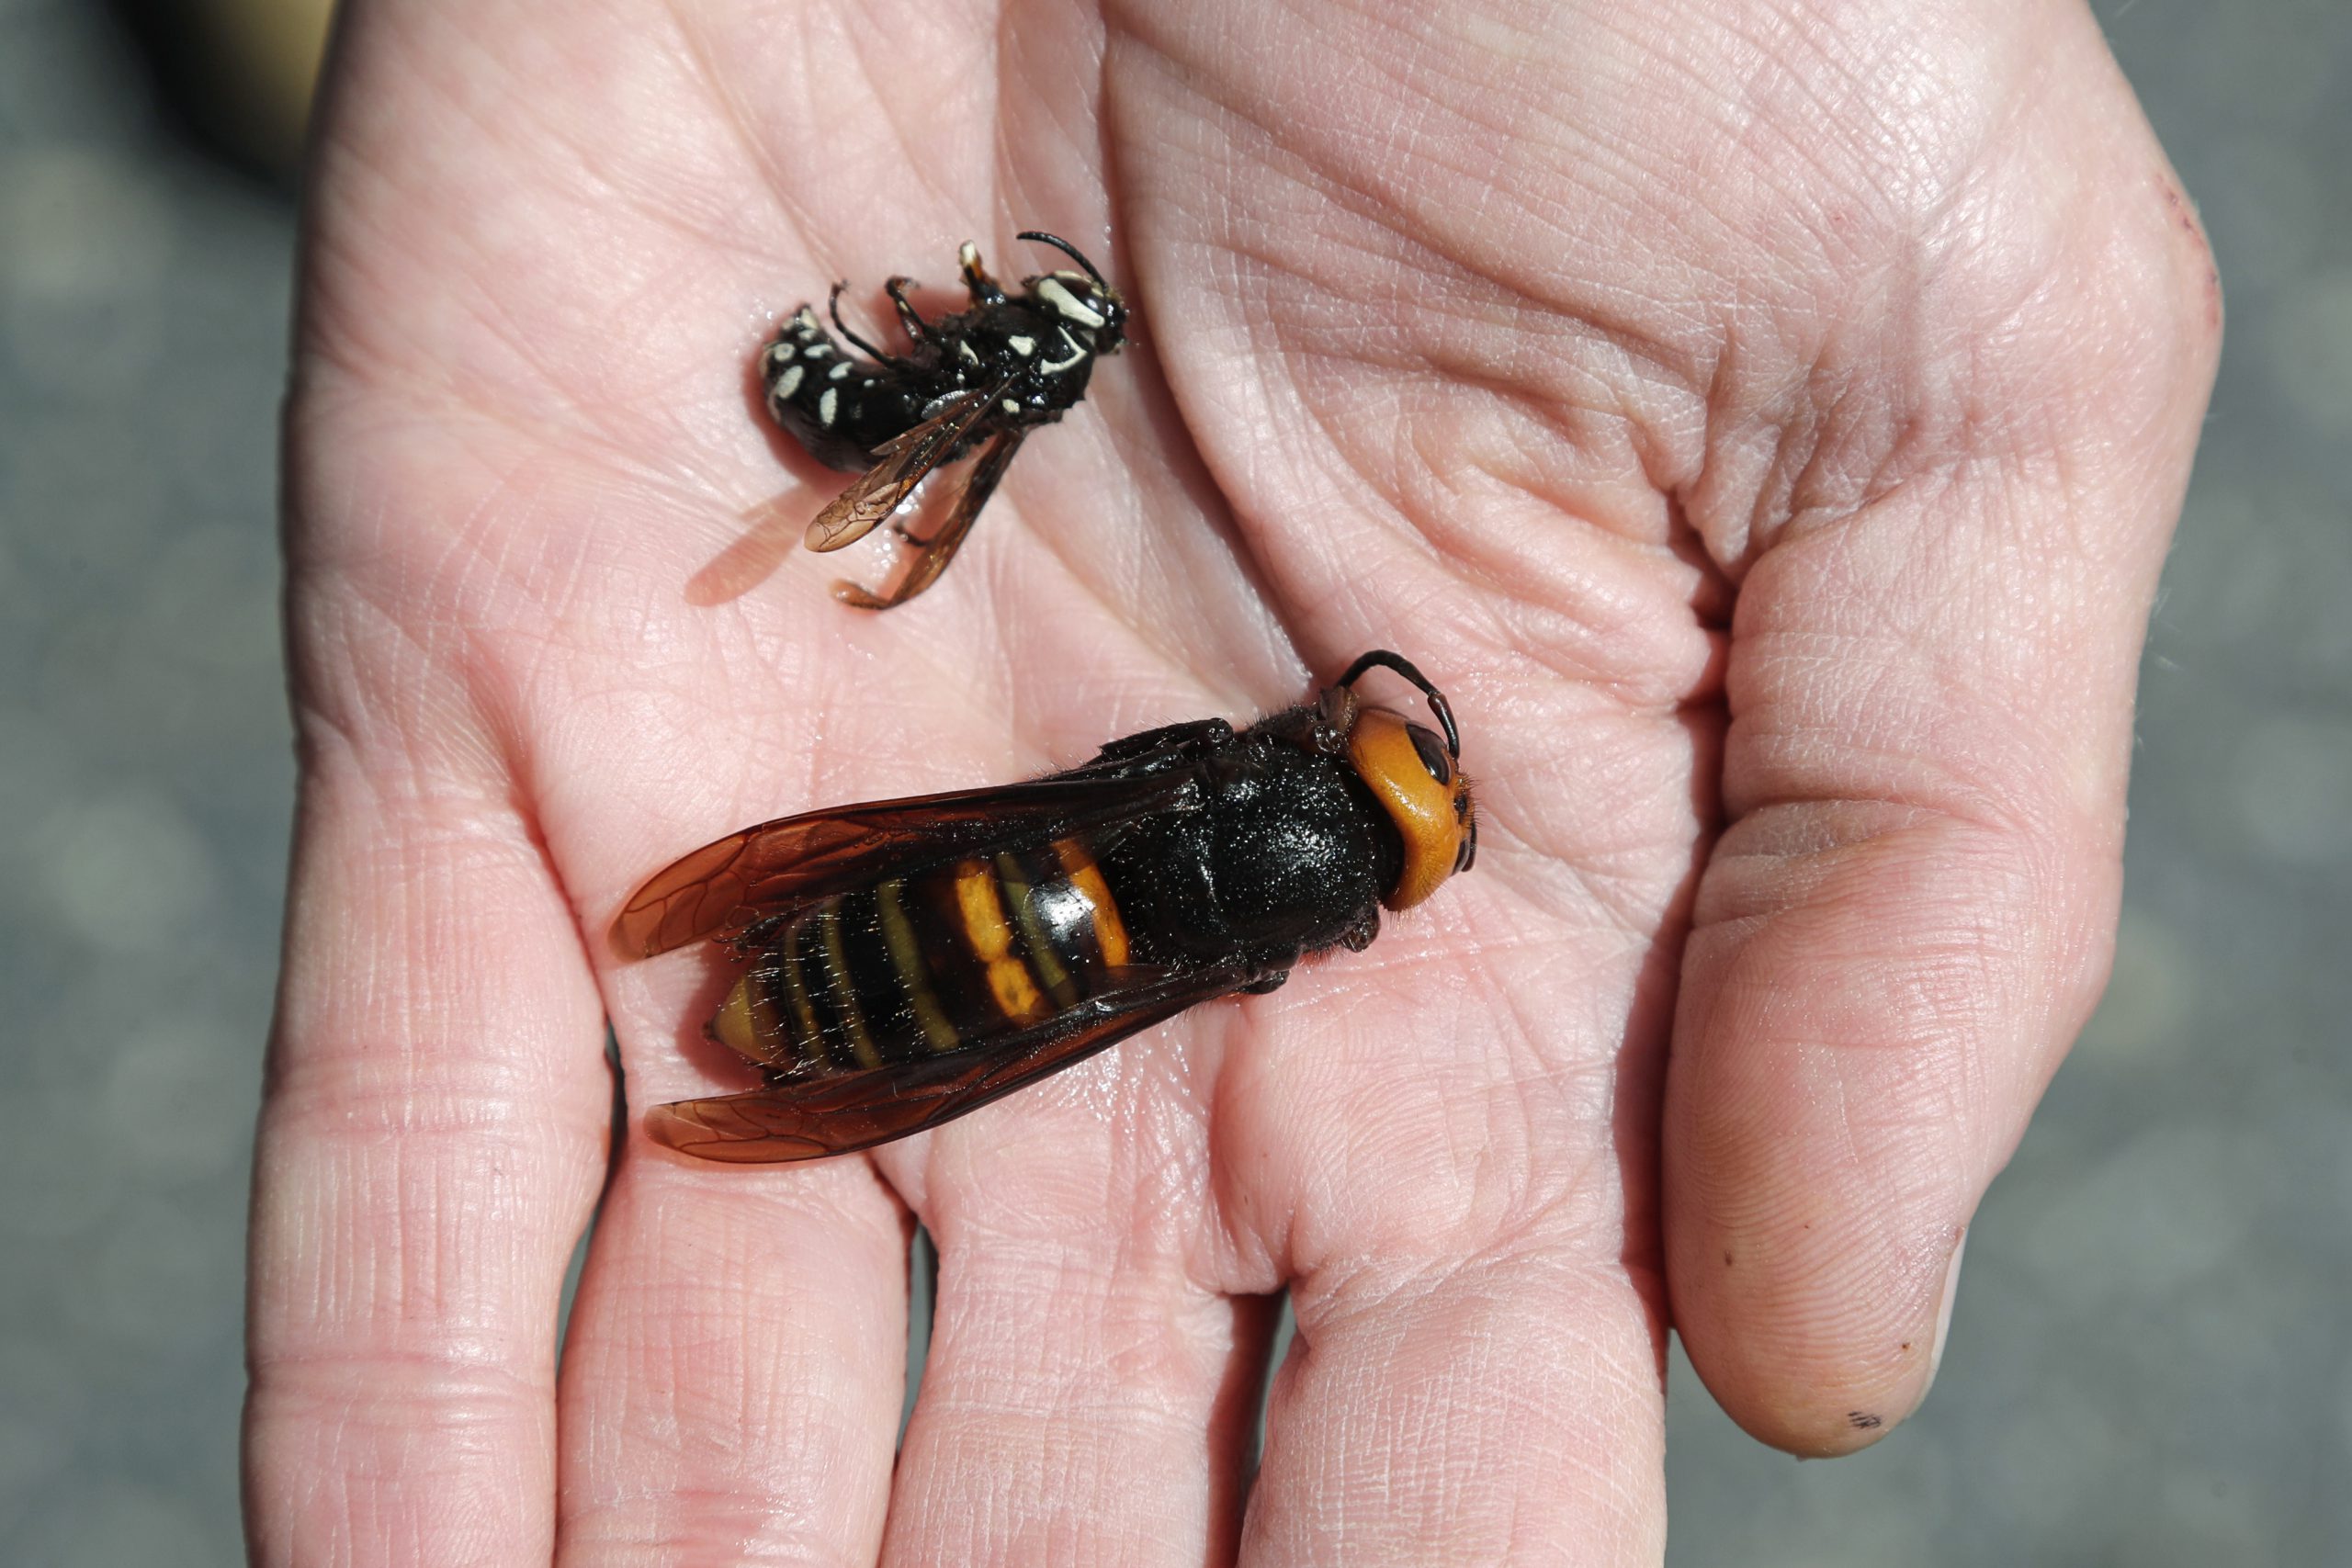 Asian giant murder hornets make first U.S. appearance 